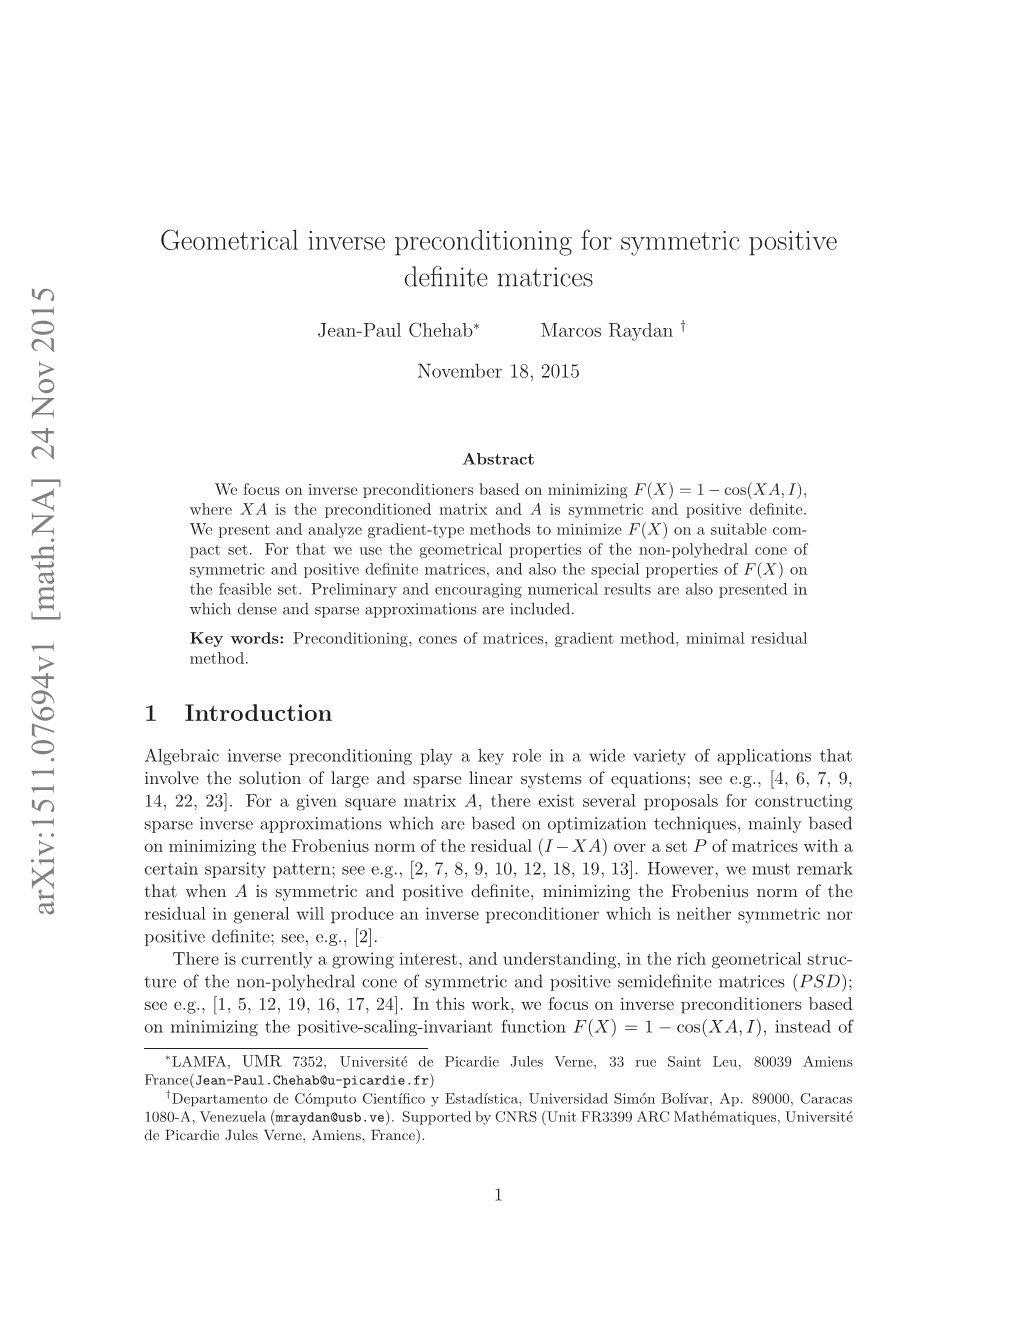 Geometrical Inverse Preconditioning for Symmetric Positive Definite